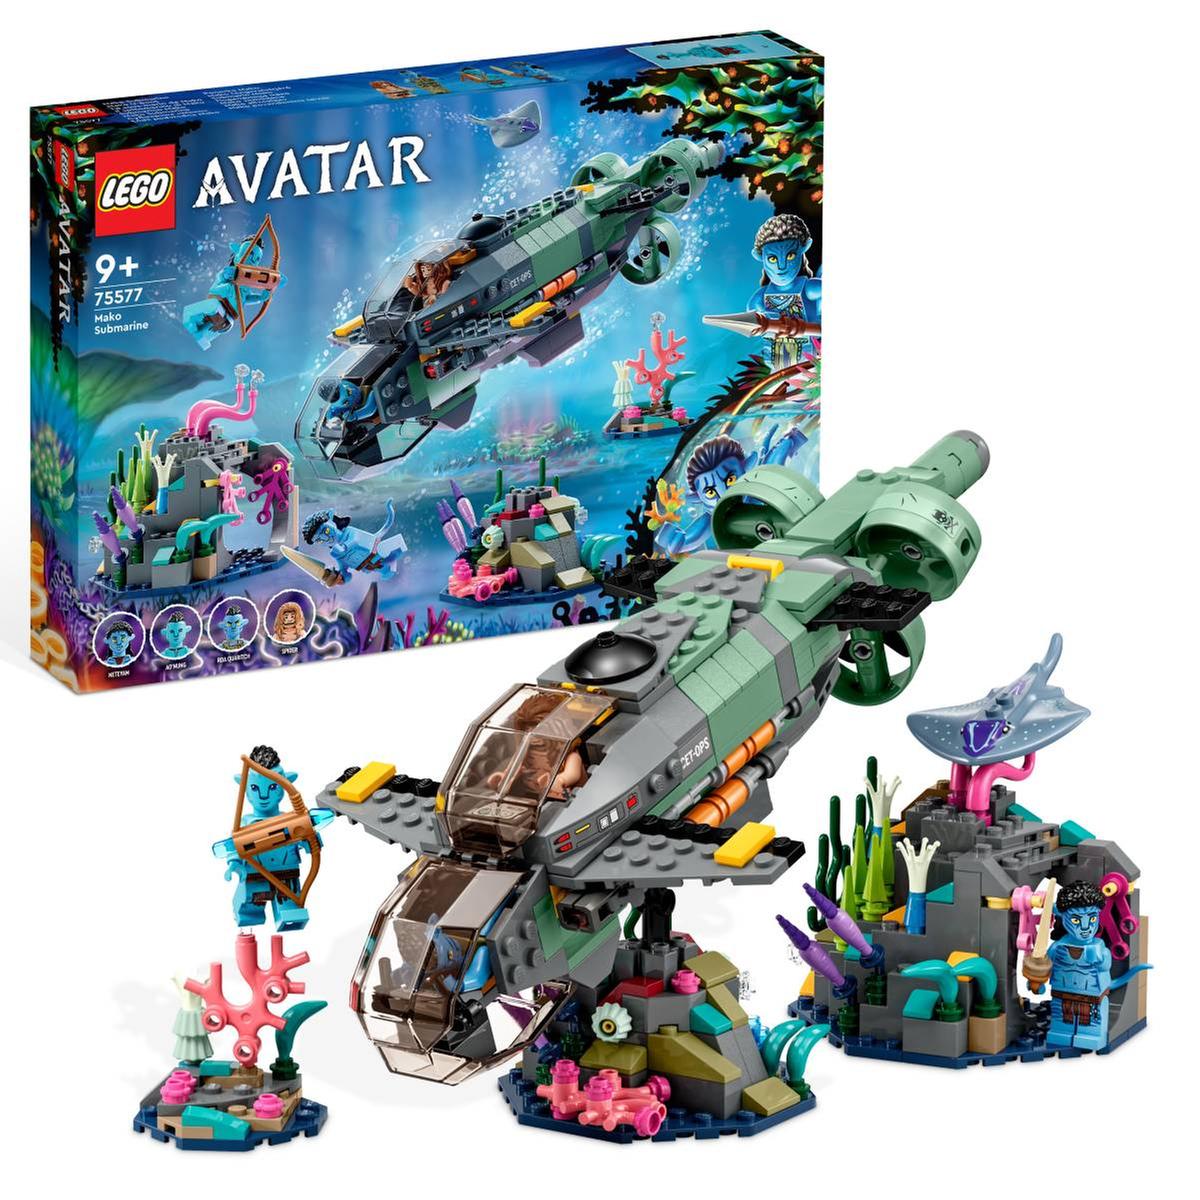 LEGO Avatar - Submarino Mako - 75577 | Lego Otras Lineas | Toys"R"Us España